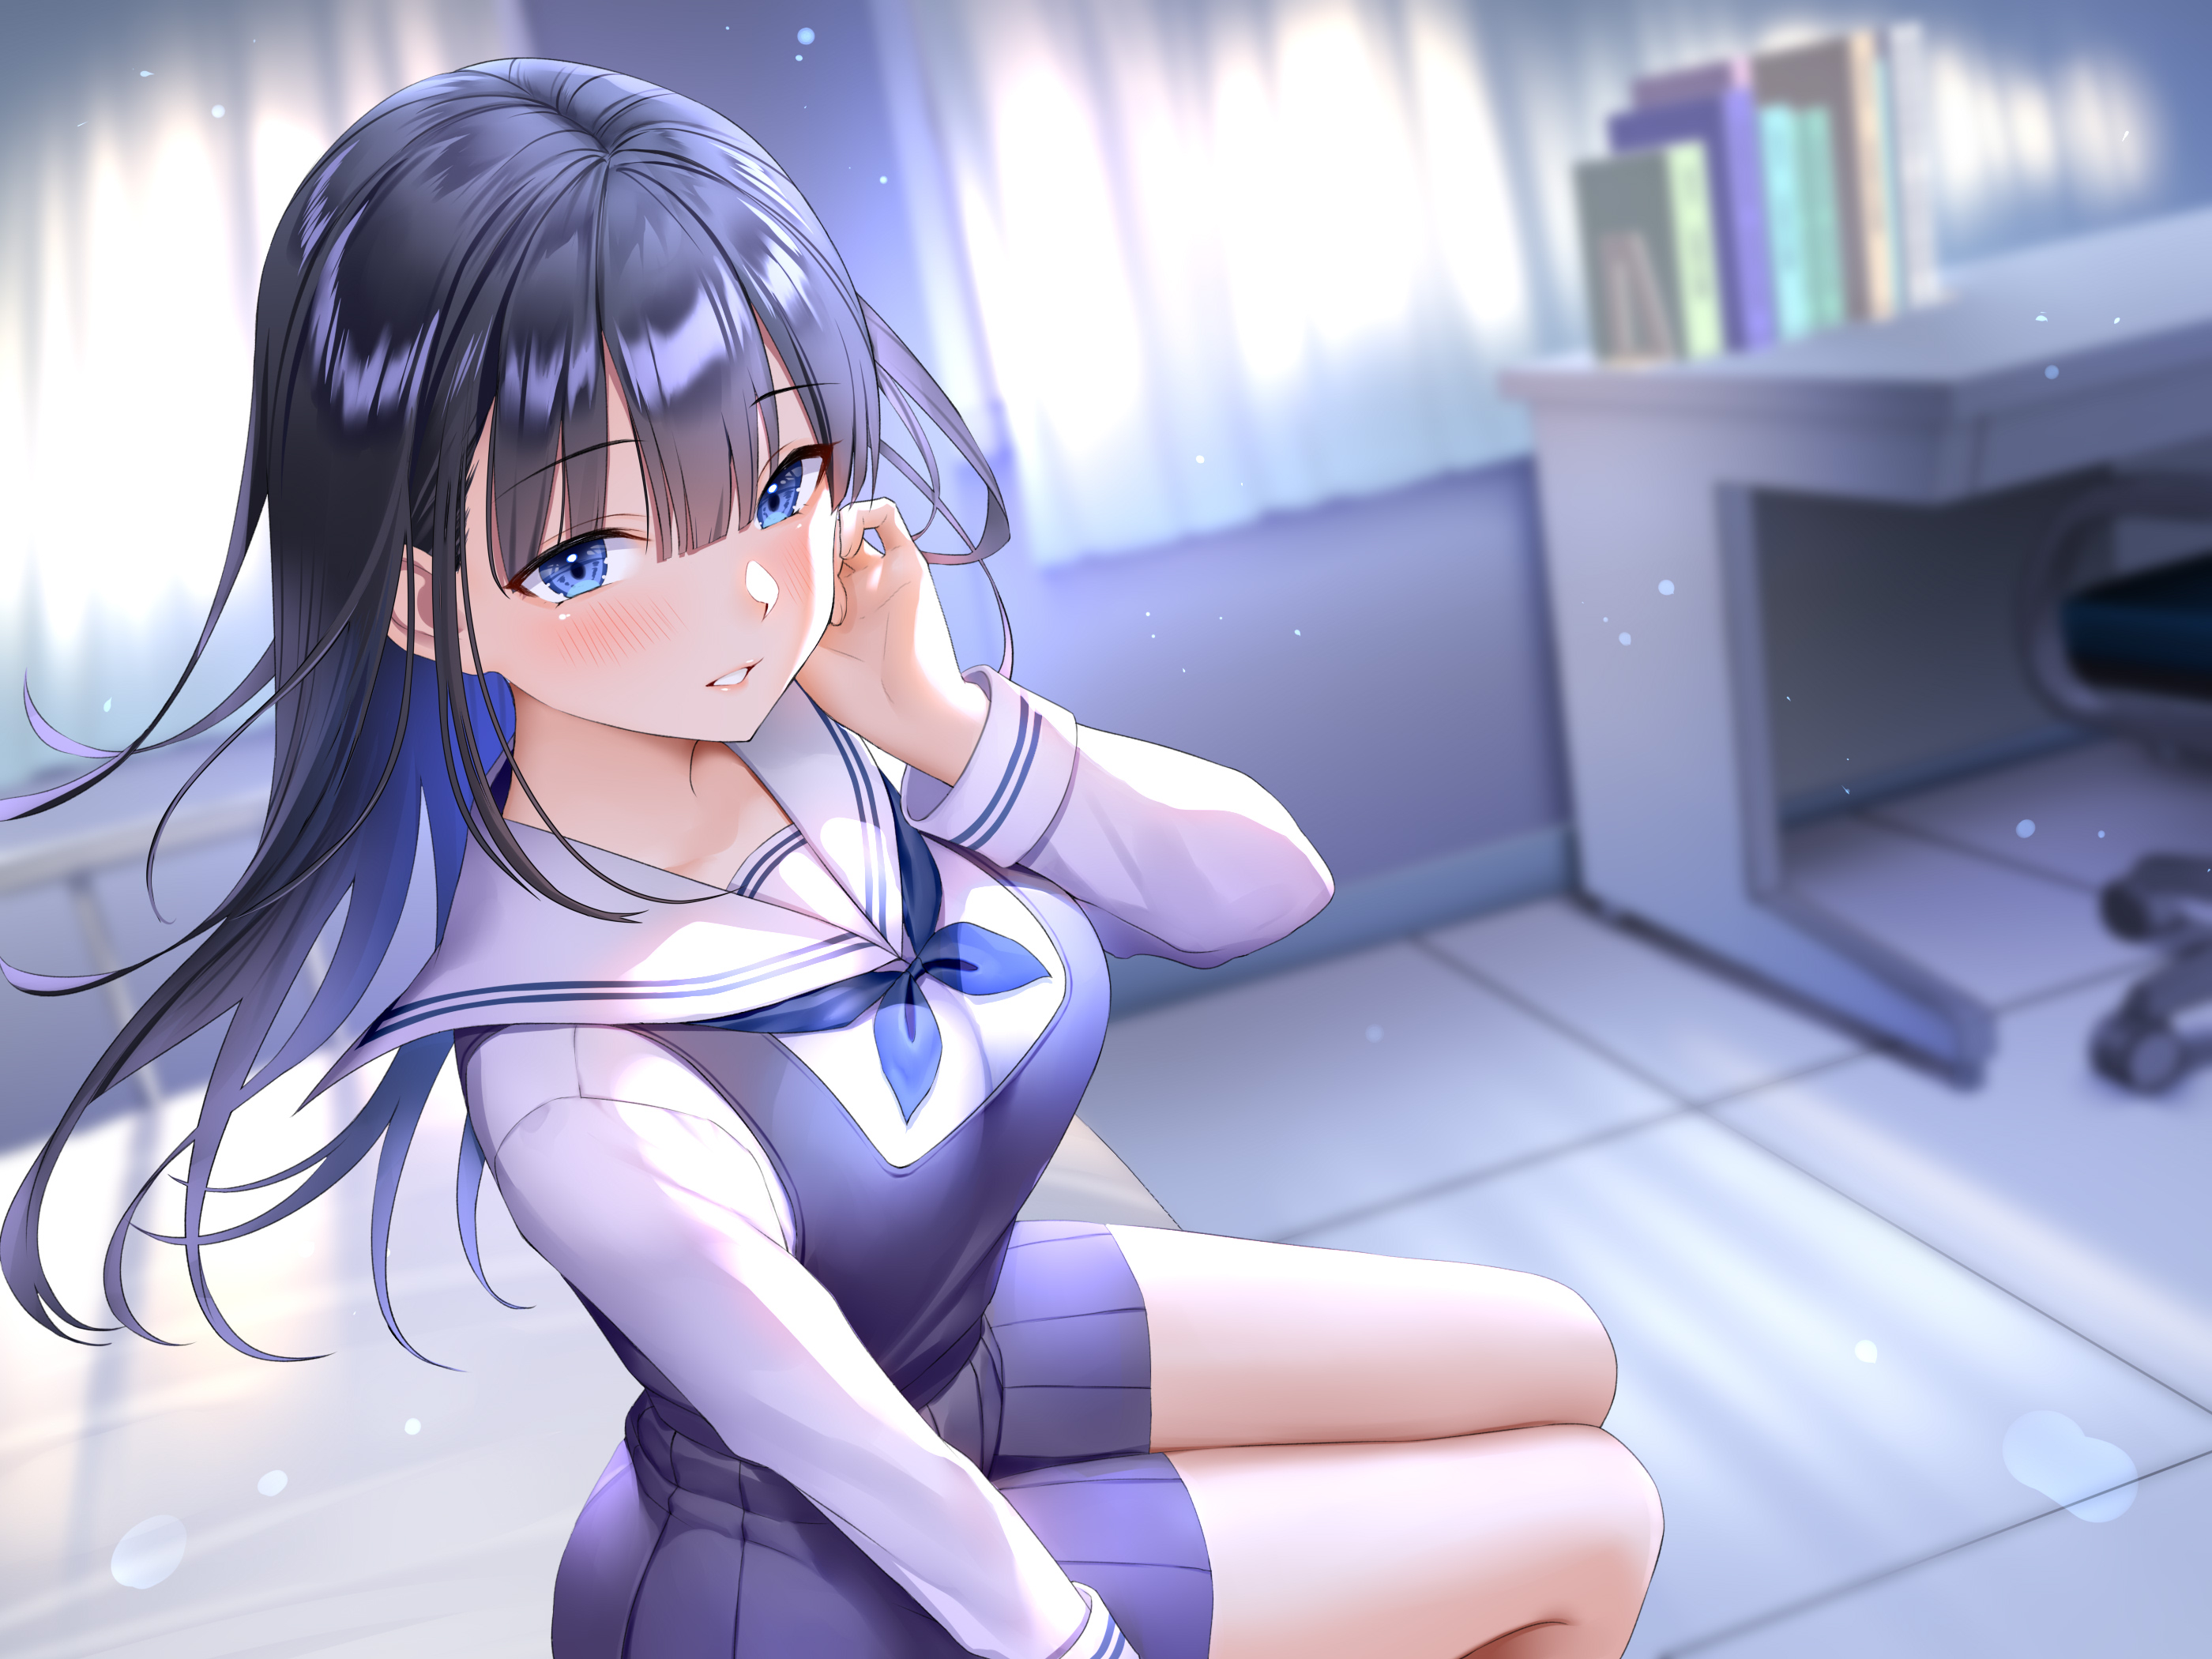 Anime 2800x2100 anime anime girls Shimashima08123 artwork dark hair blue eyes blushing school uniform